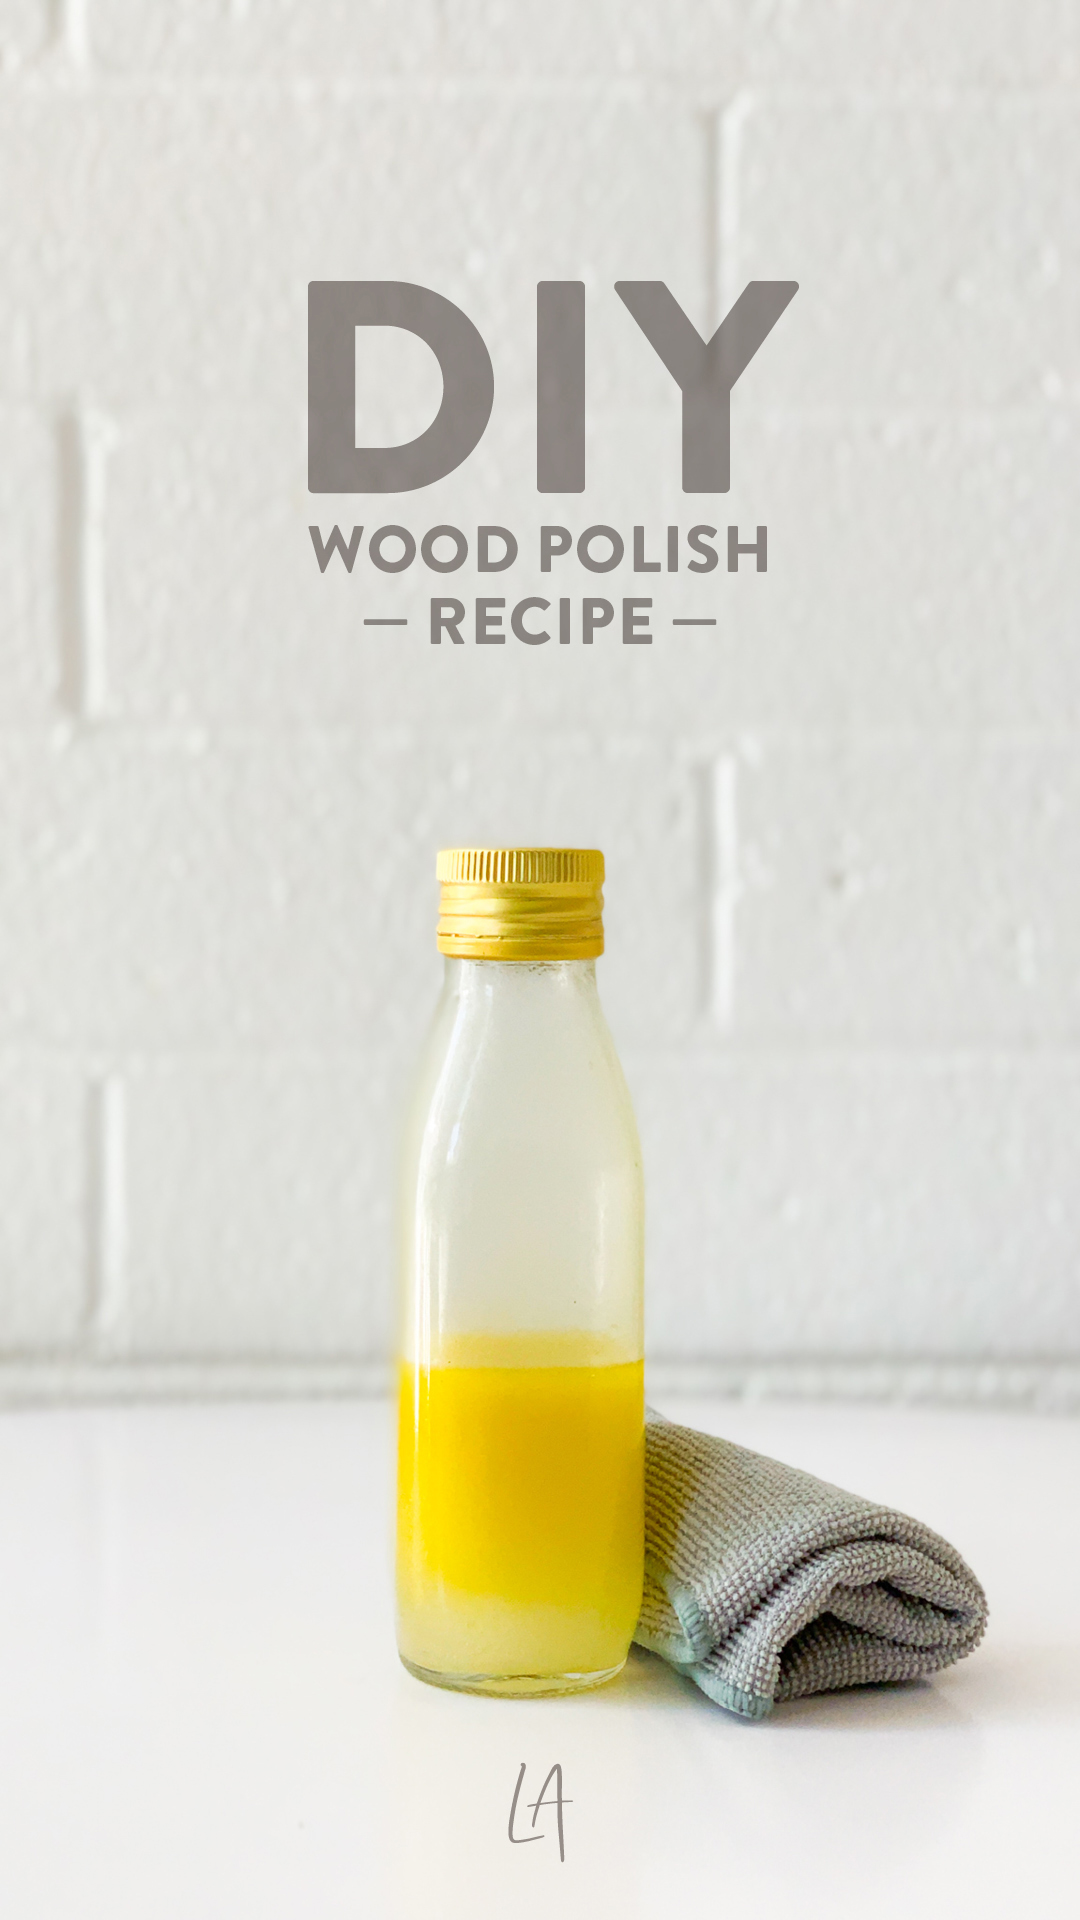 DIY Wood polish recipe